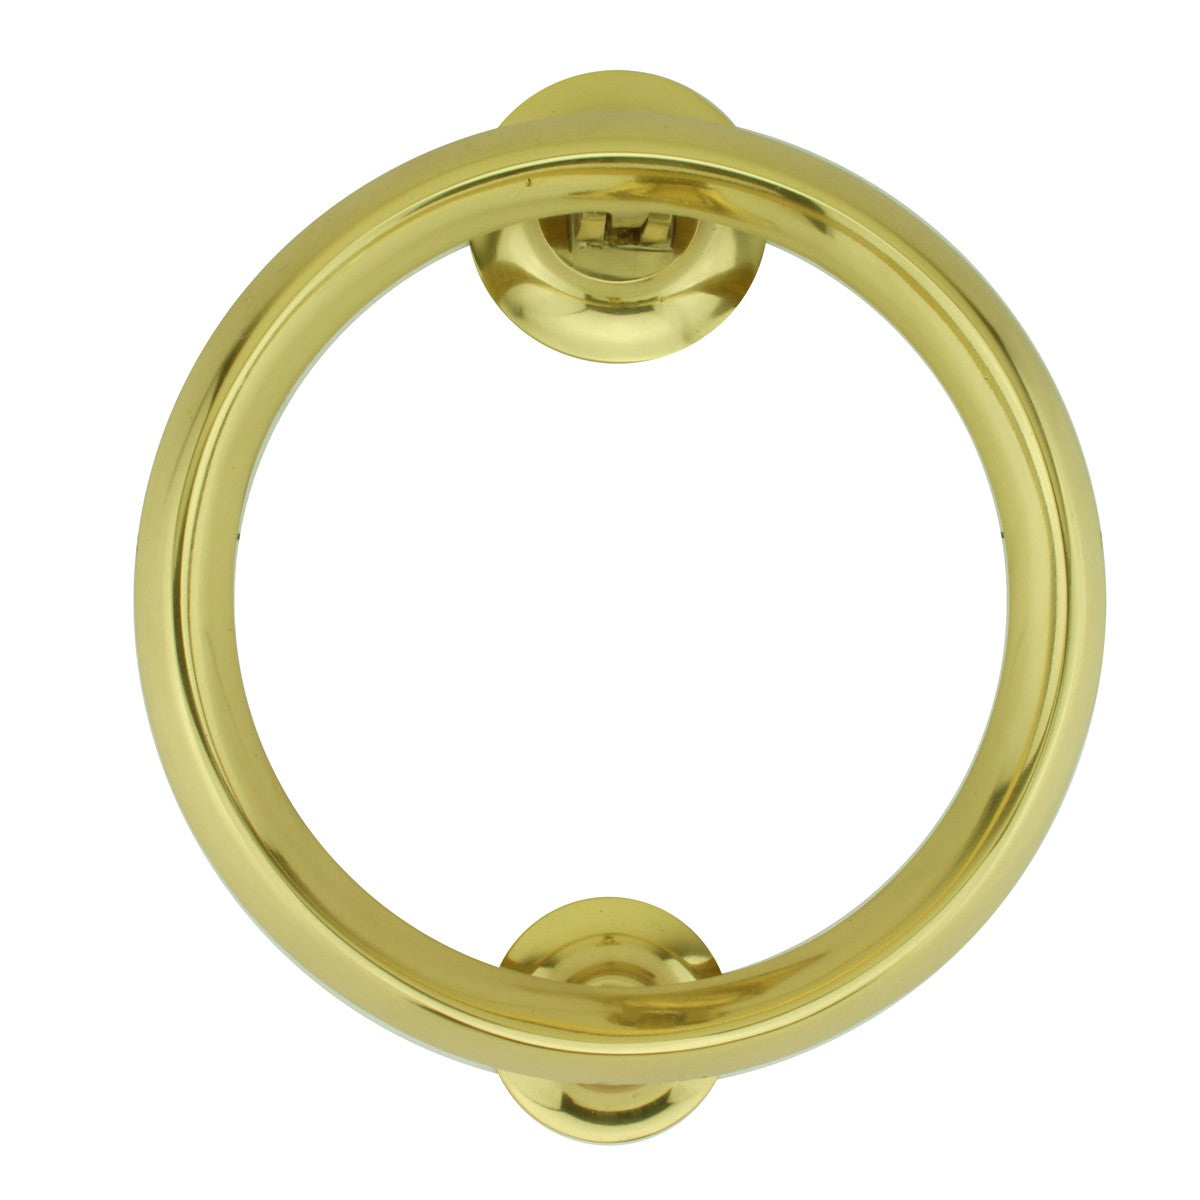 Brass Ring Door Knocker Heavy Duty Smooth Round Shape 5 inch Diameter